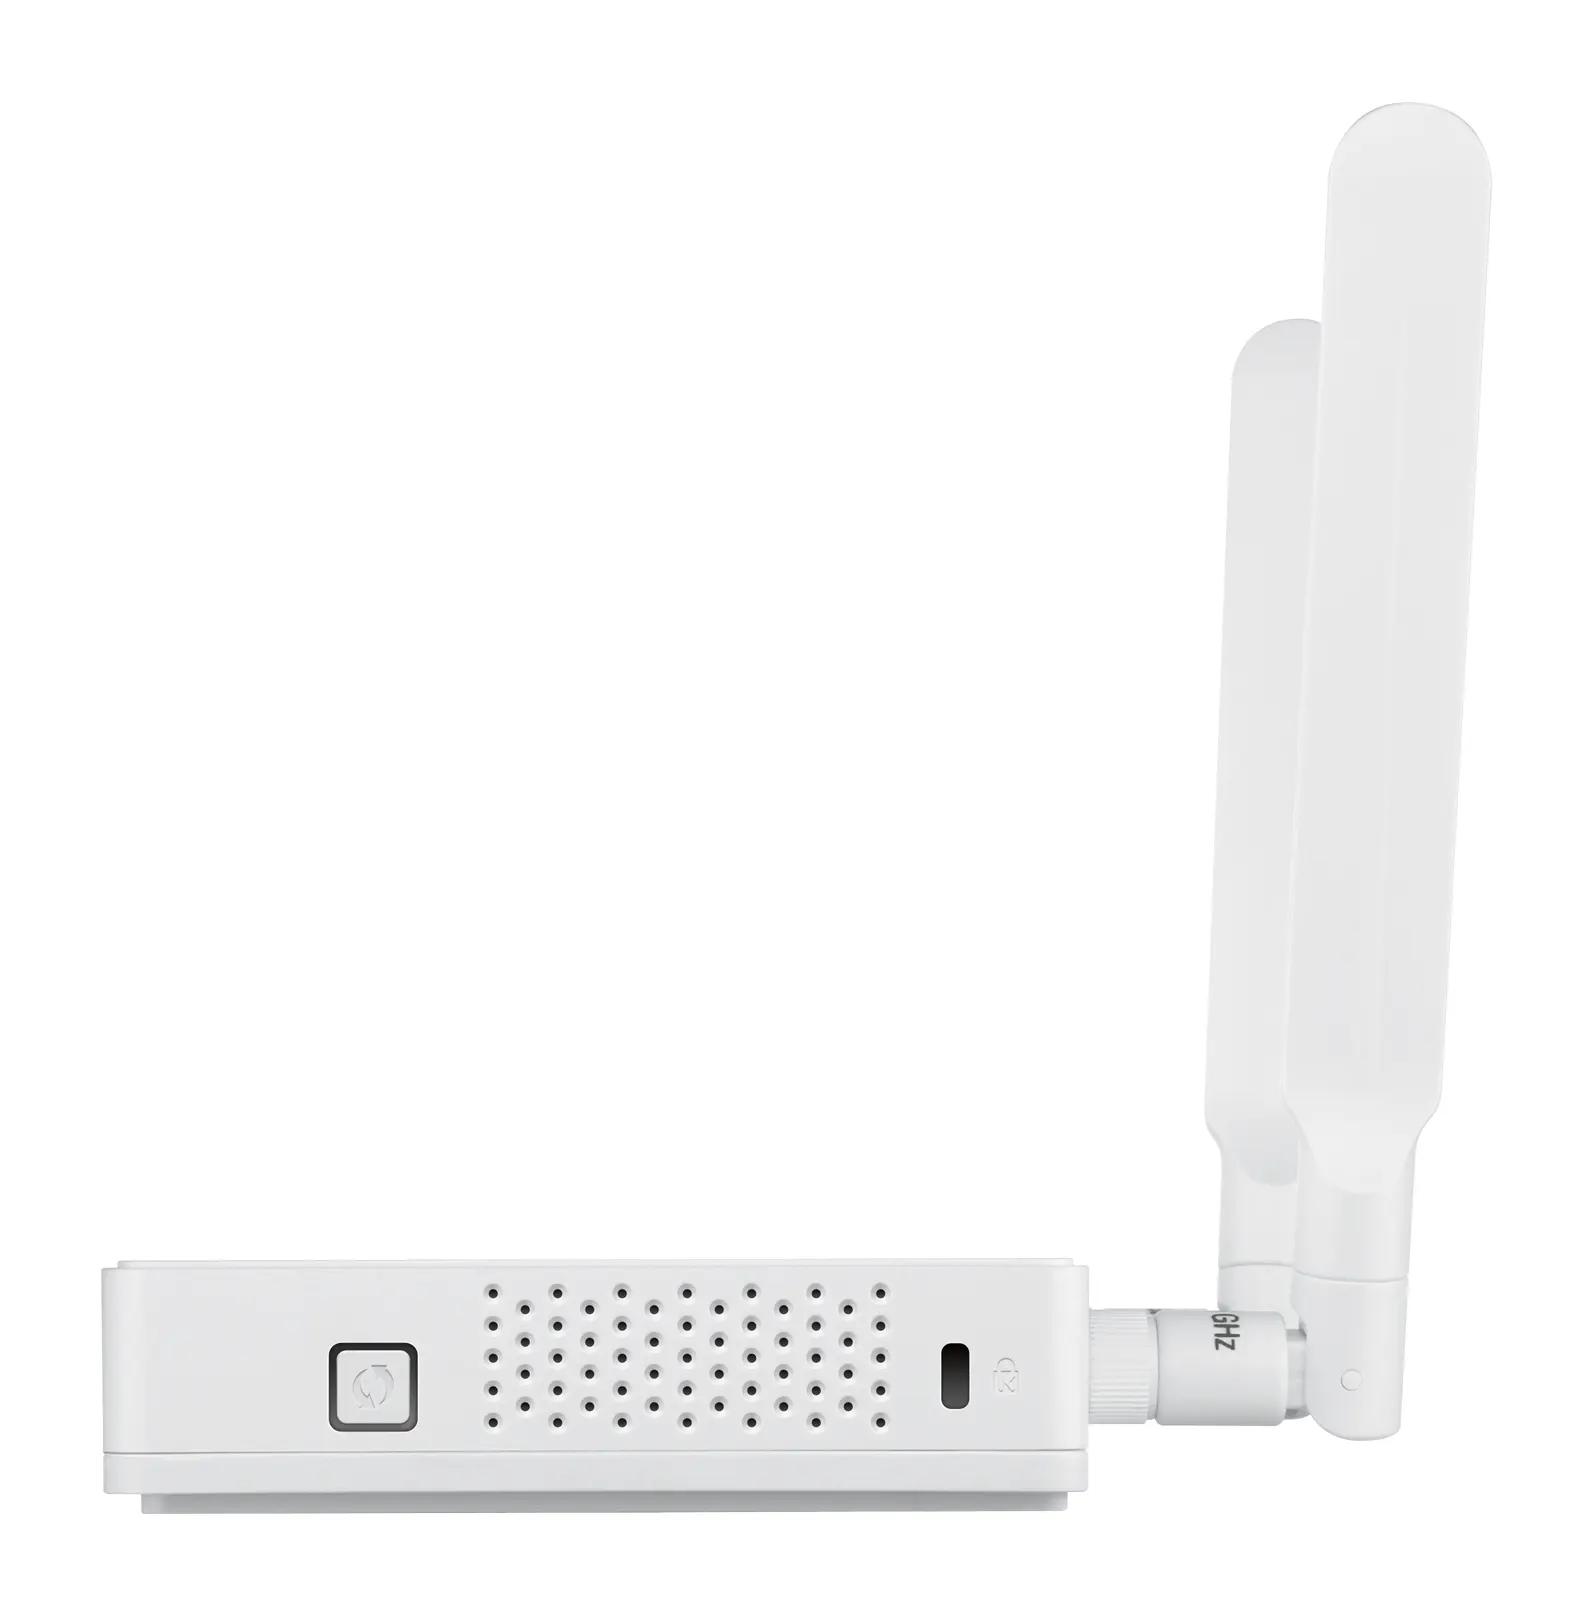 D-Link Wireless Access Point AC1200, Dual Band, White, DAP-1665